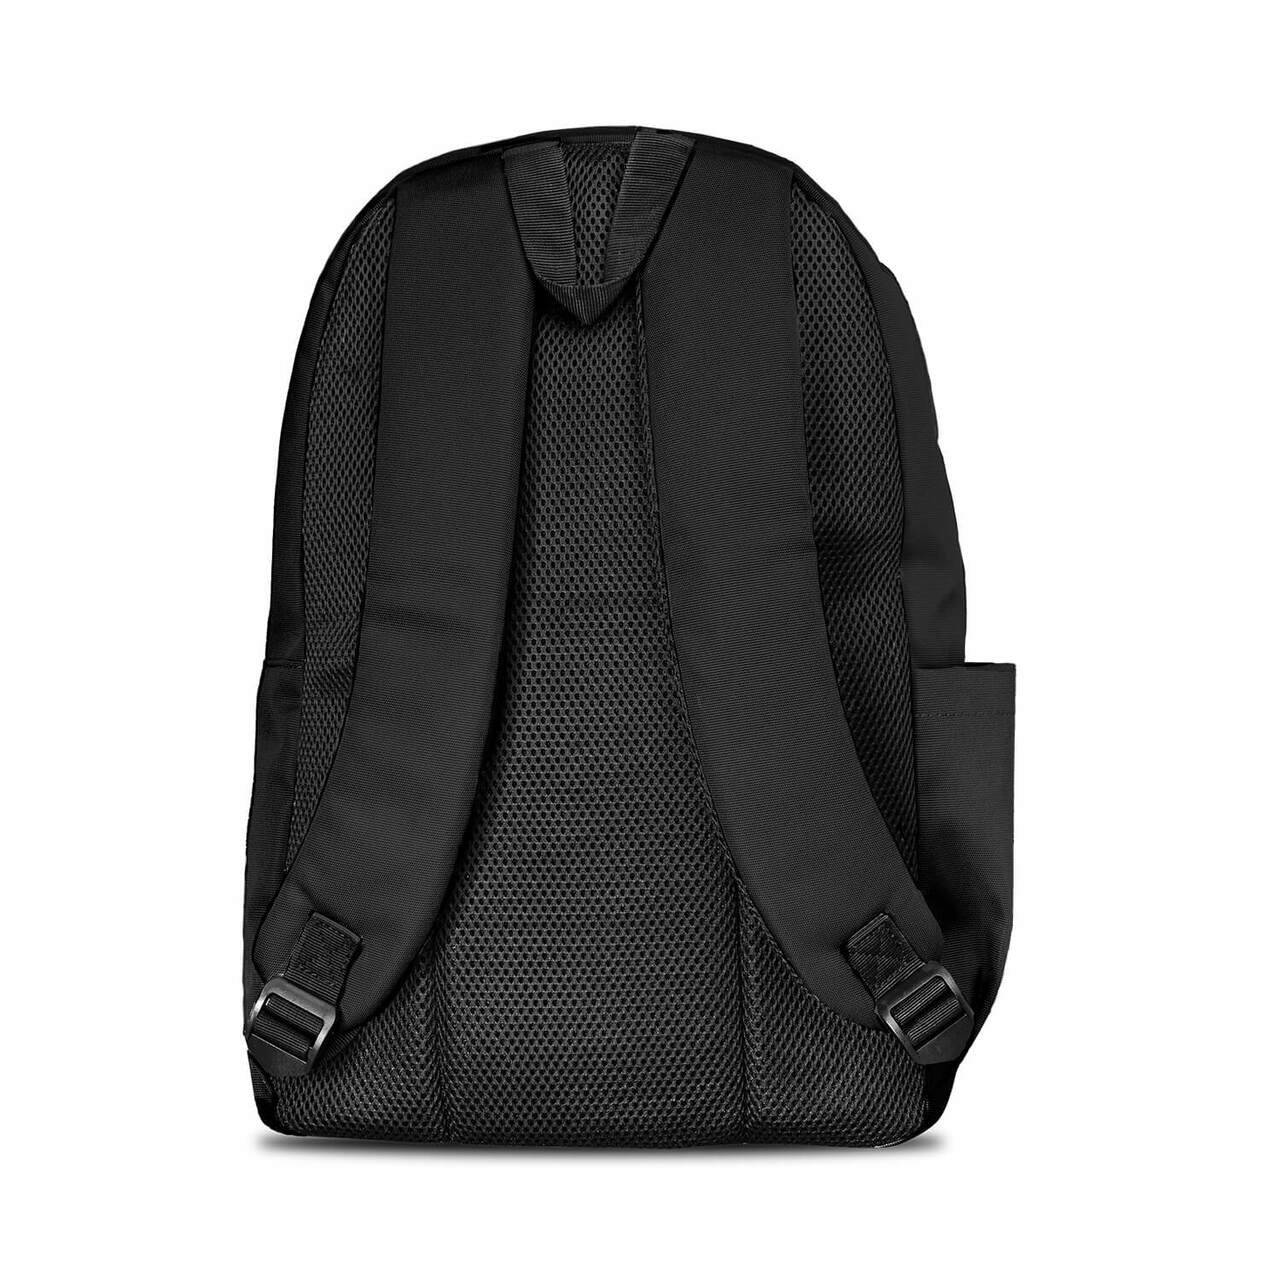 Miami Hurricanes Campus Laptop Backpack- Black